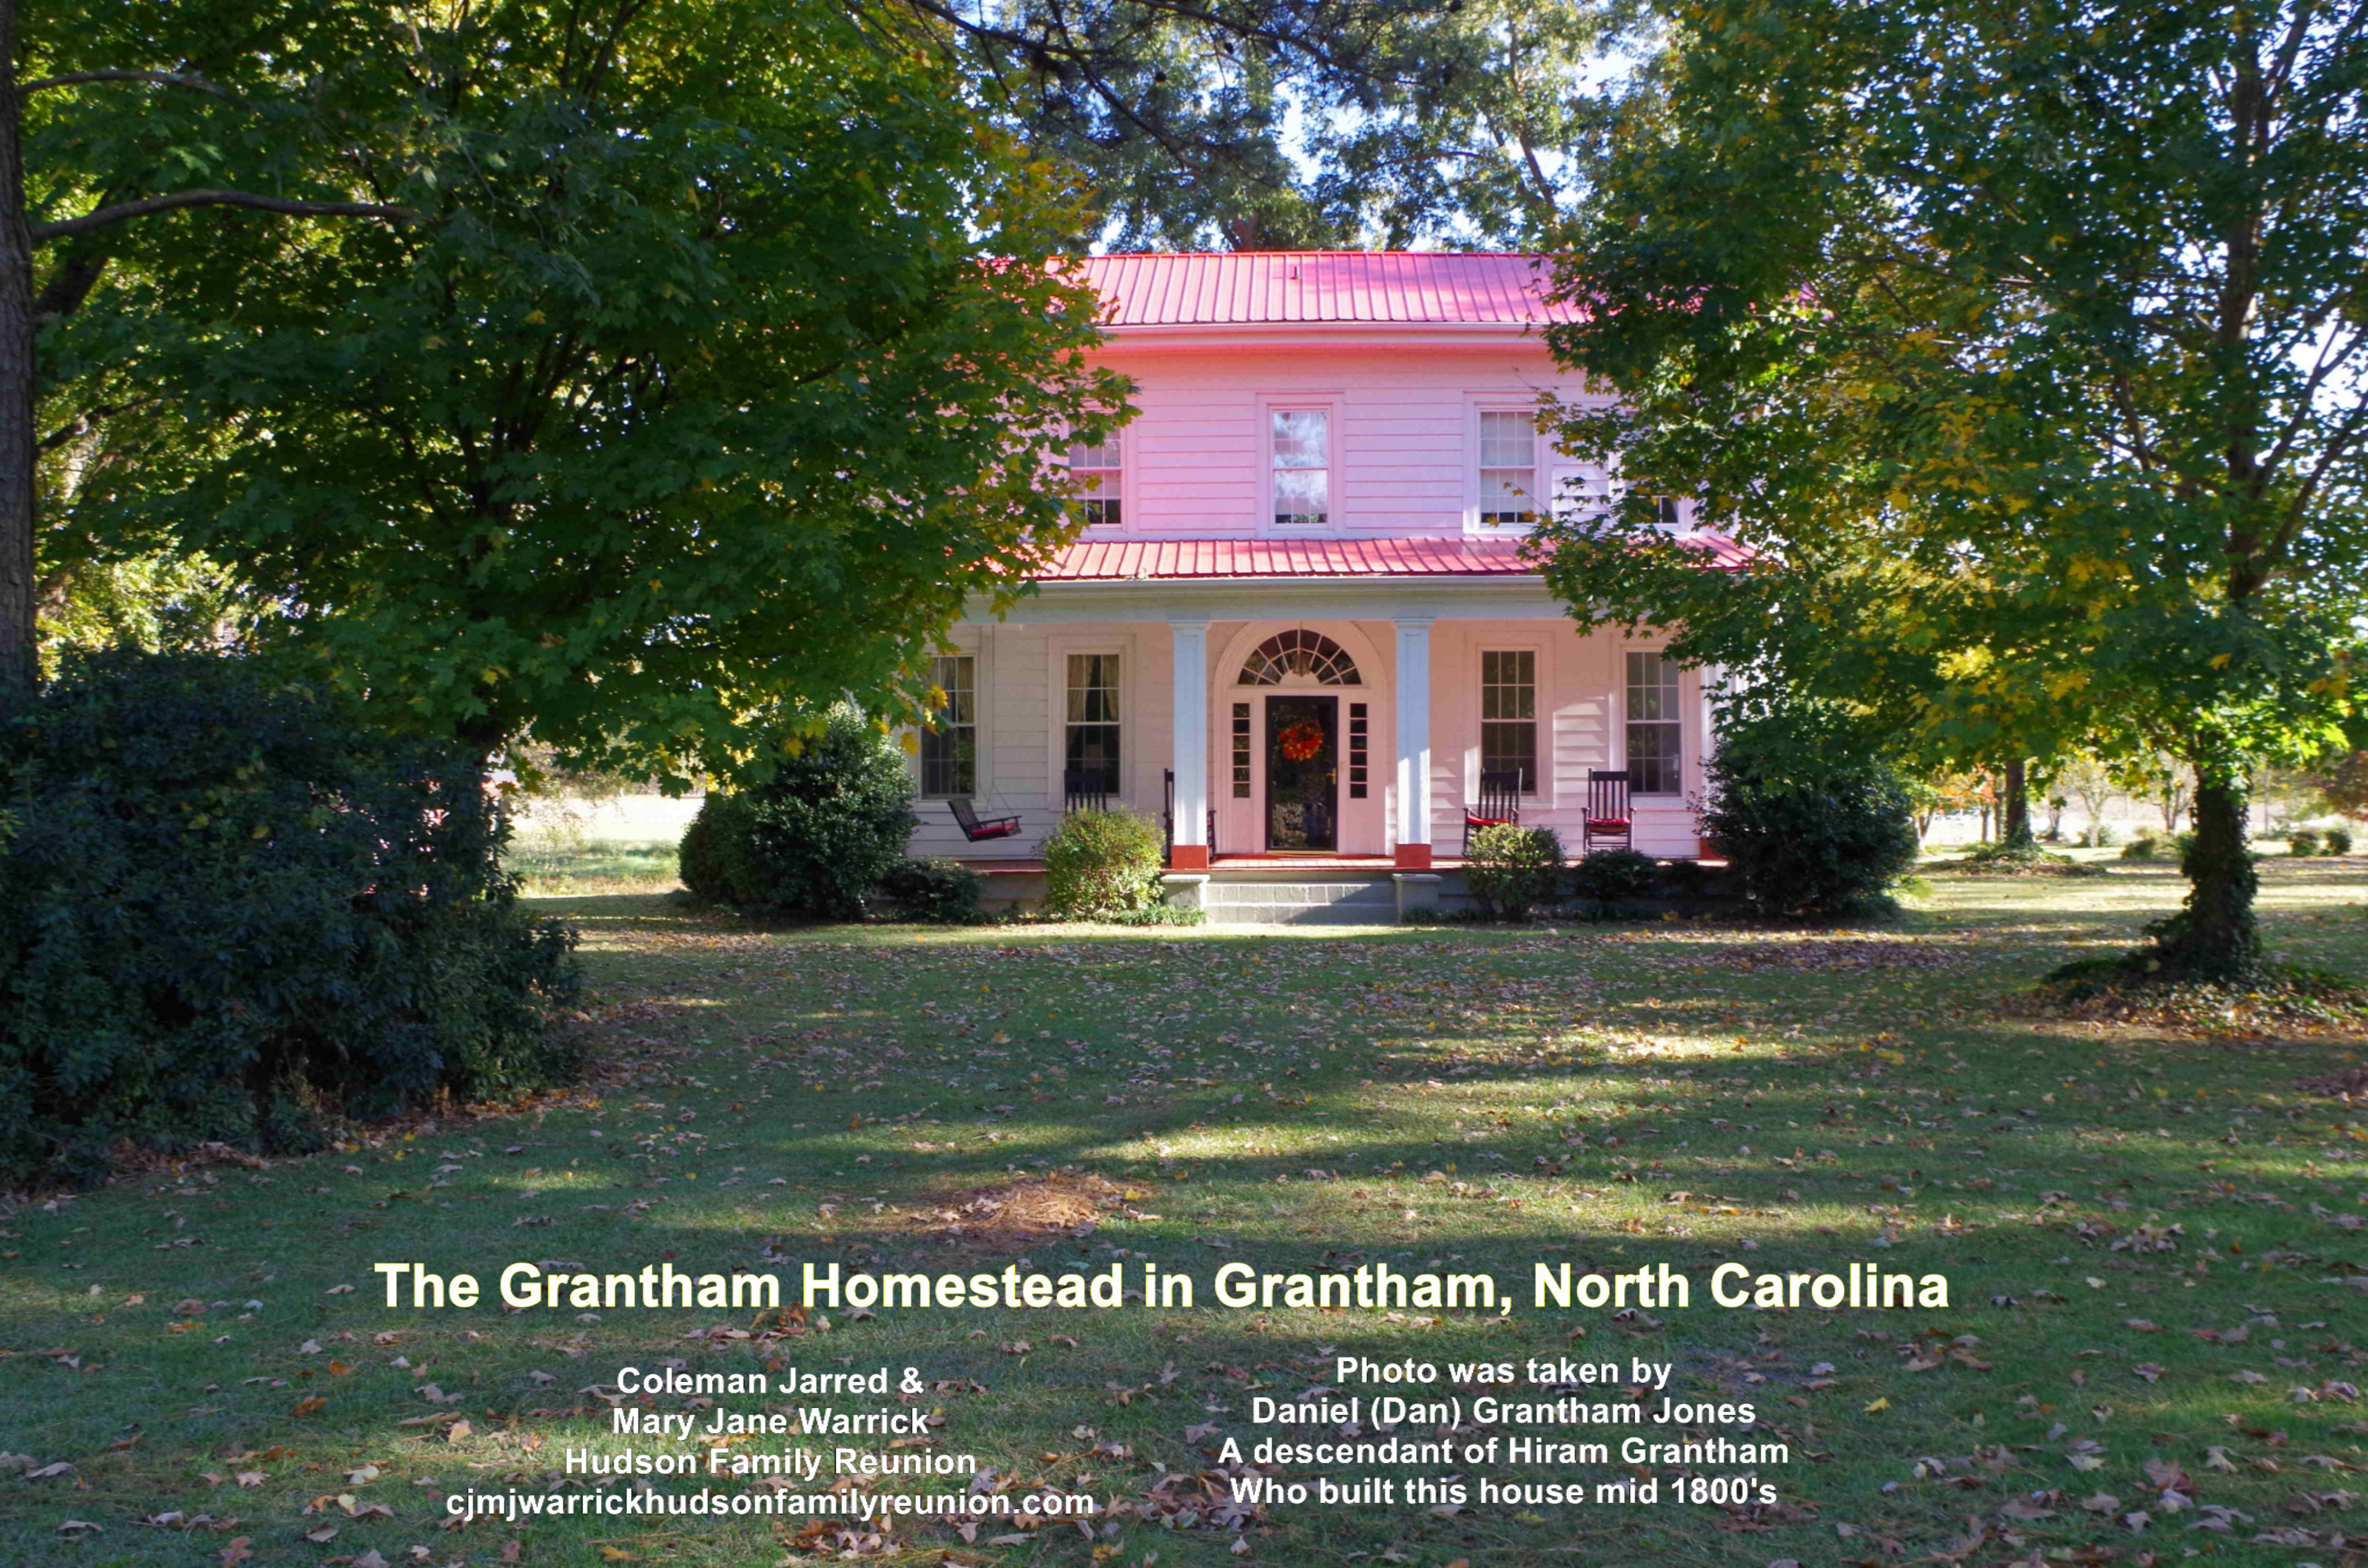 Grantham Homestead in Grantham, North Carolina